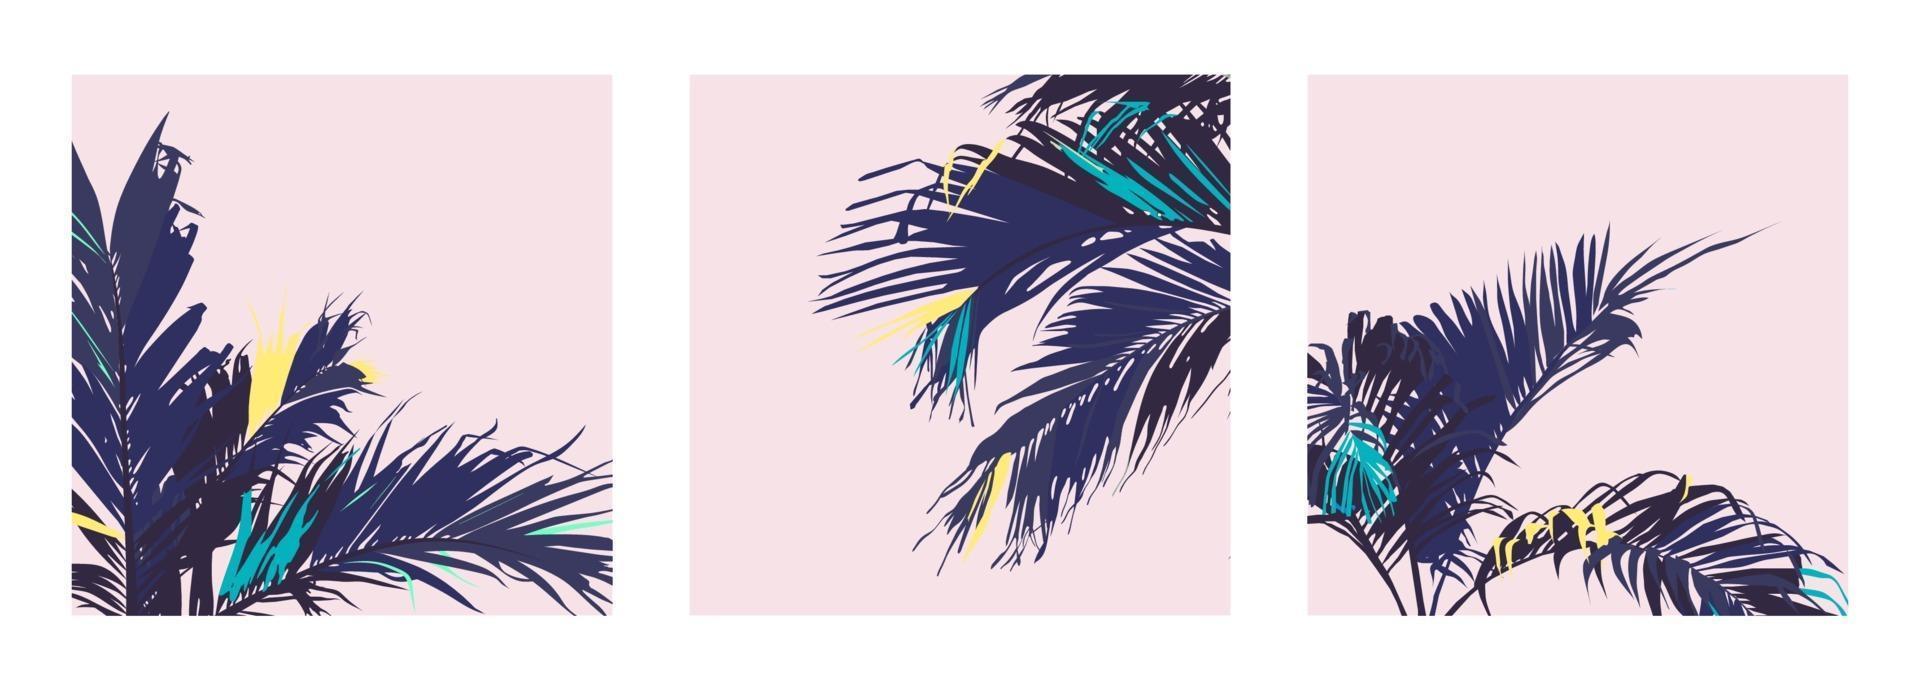 folha de palmeiras tropicais exóticas pastel, paleta de cores pastel vintage retro doce vetor